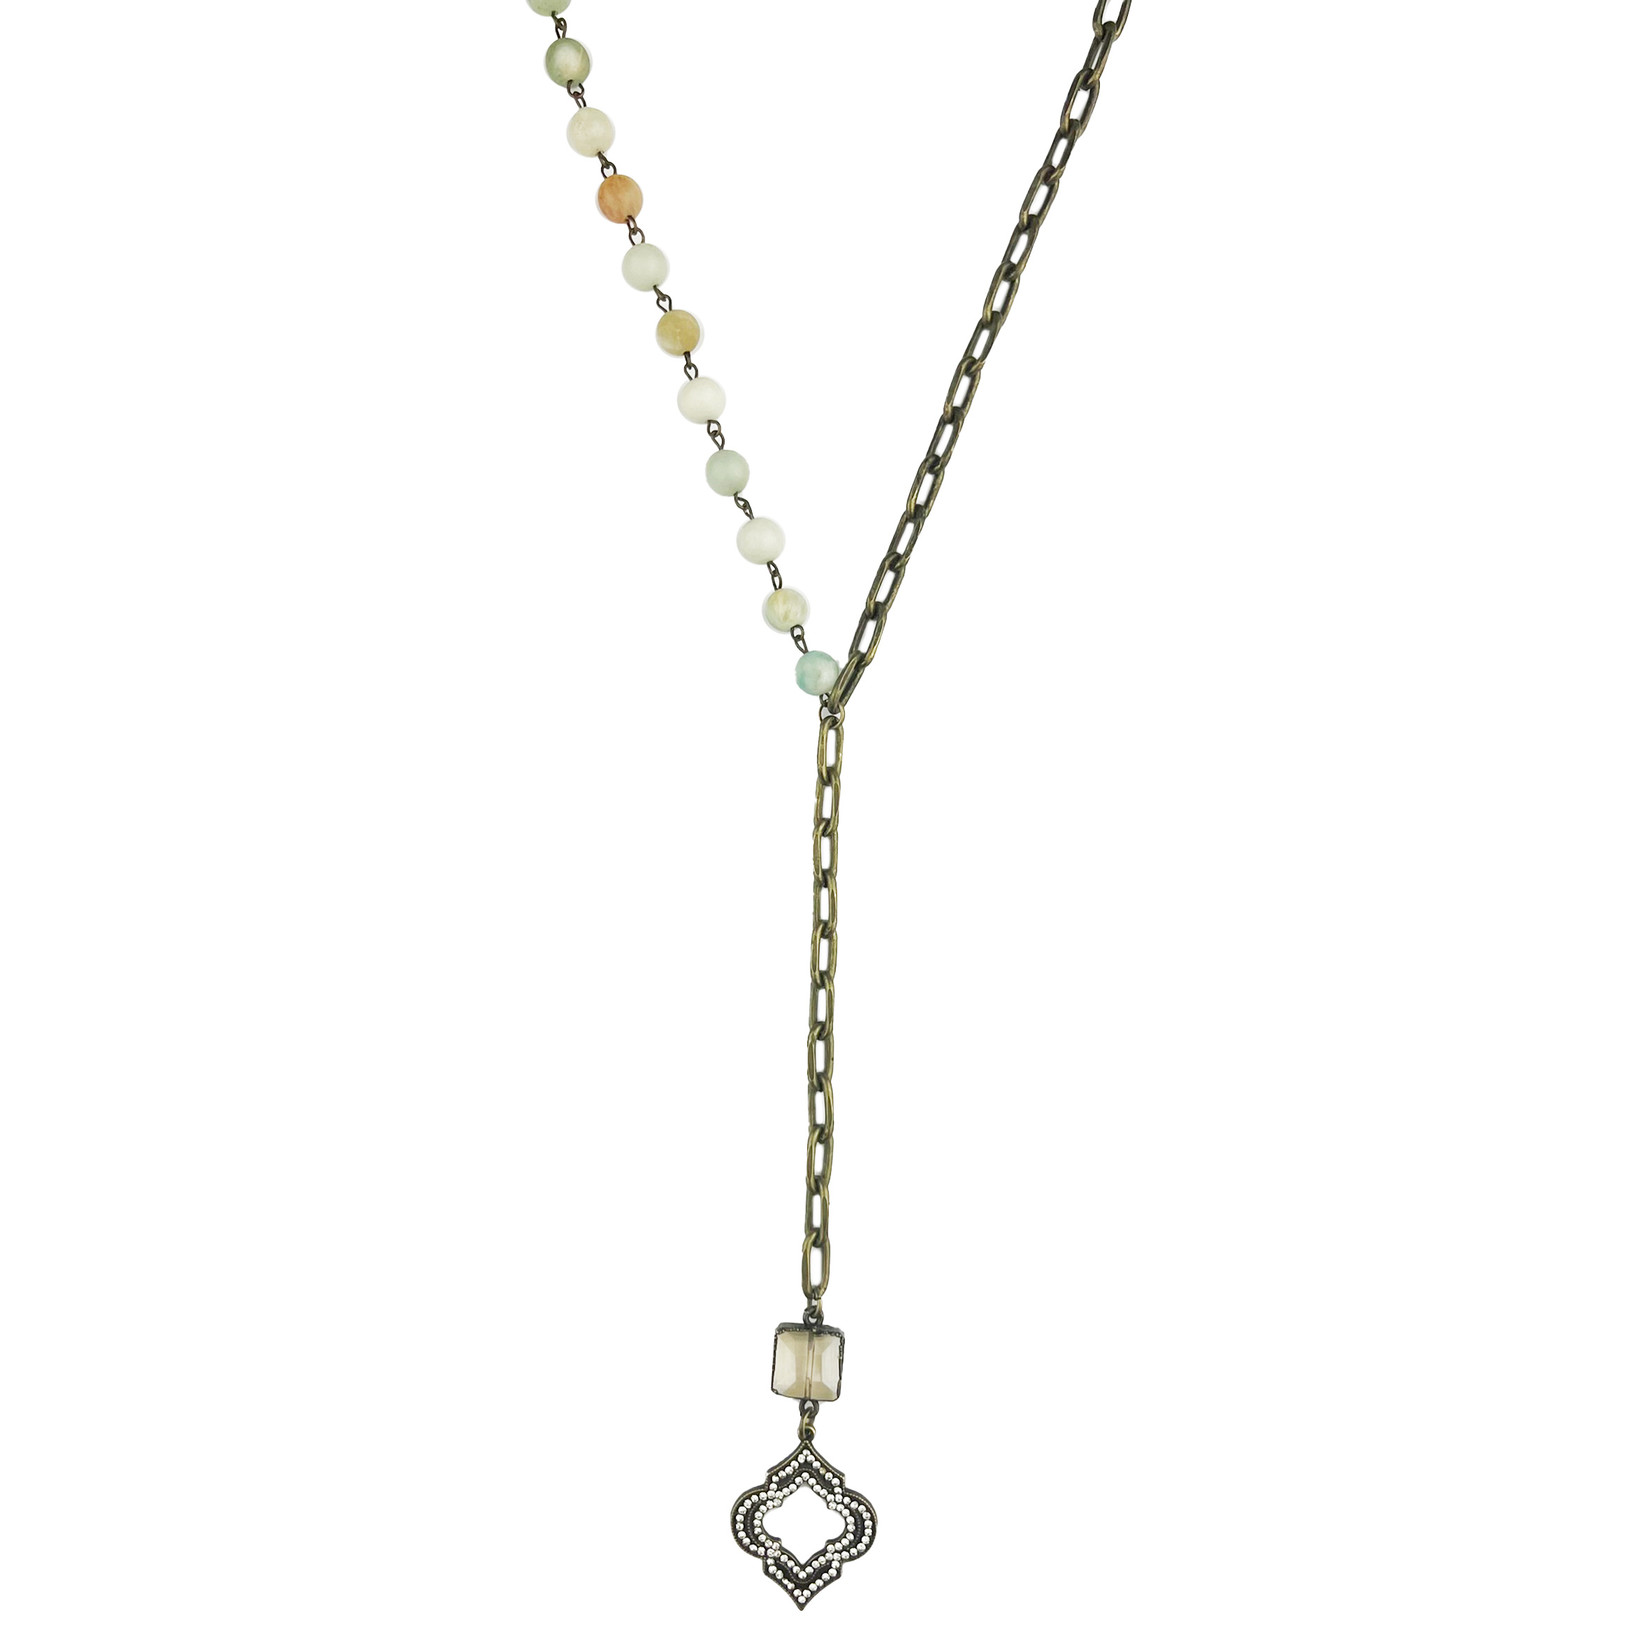 Chain & Beads Necklace 1pc/$9ea *3pcs/$6.75ea *6pcs/$4.50ea